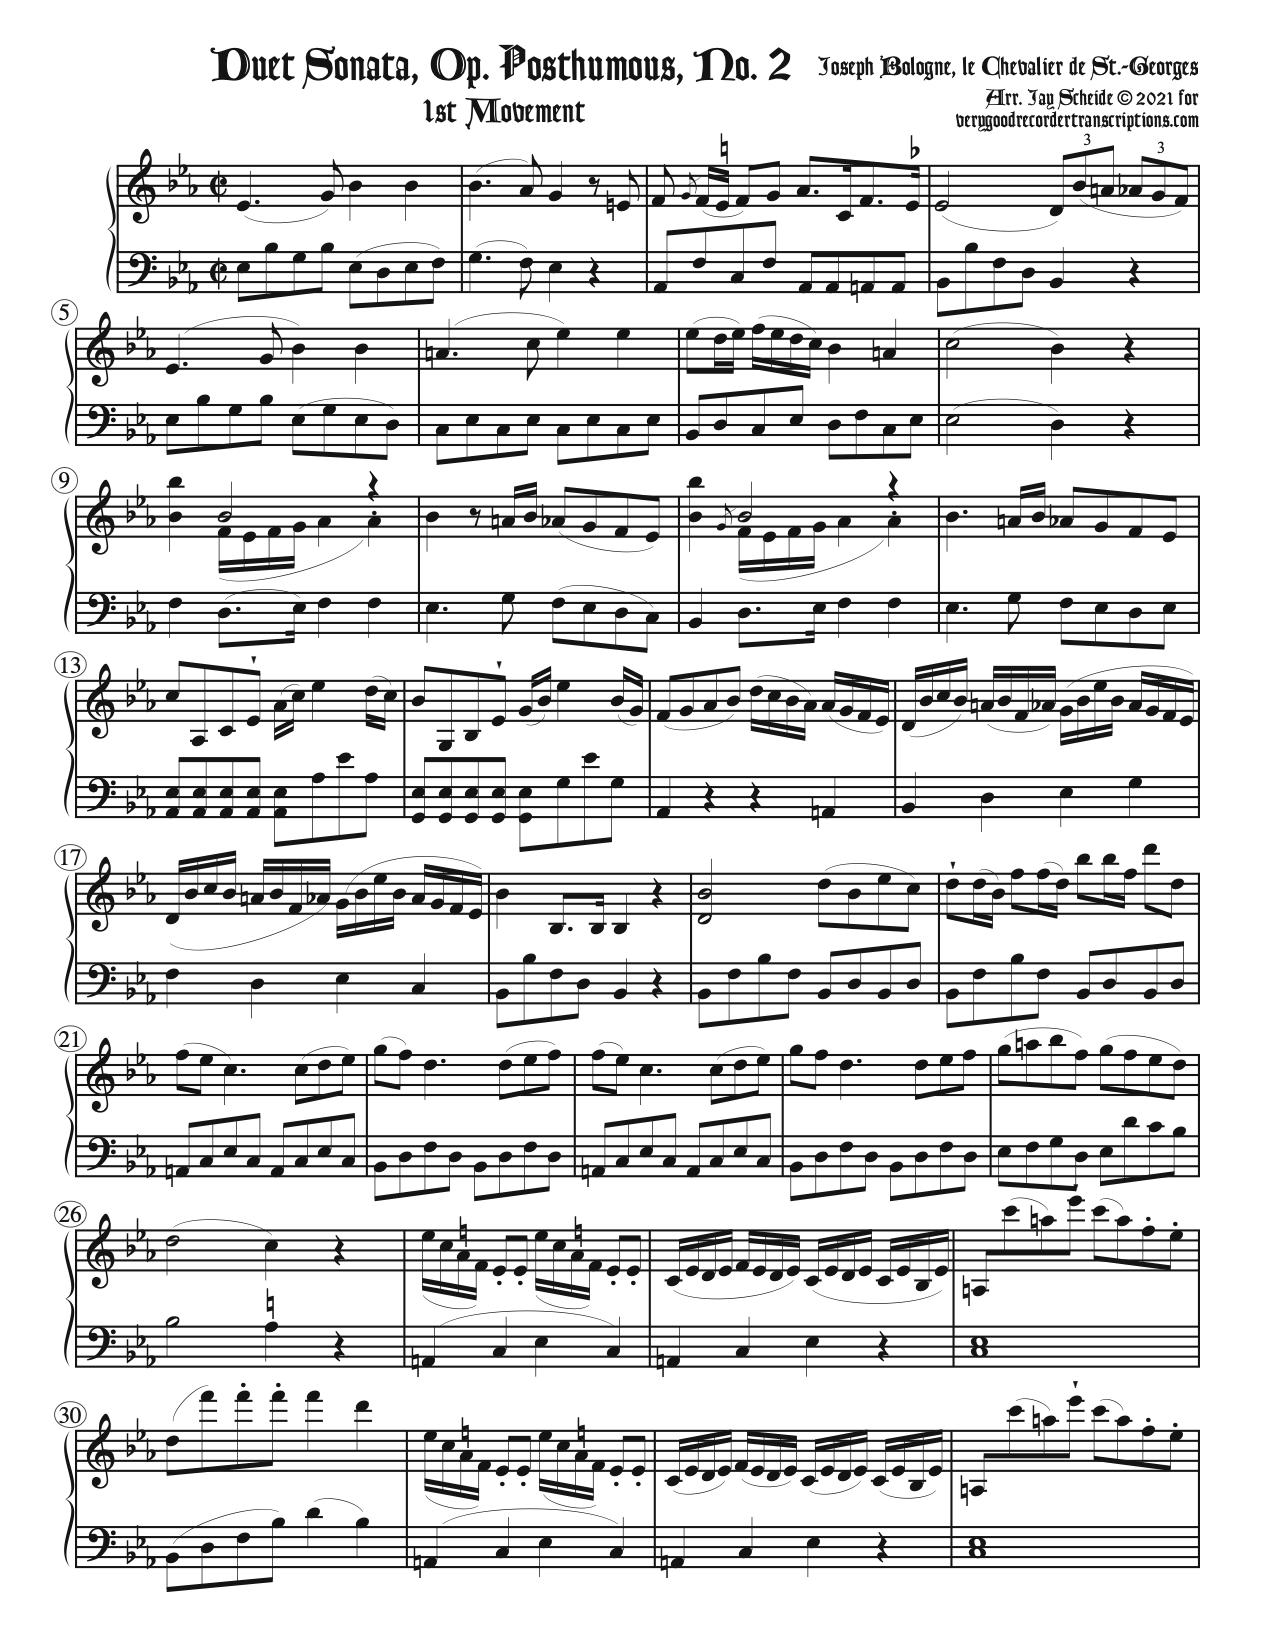 Duet Sonata Op. Posthumous No. 2